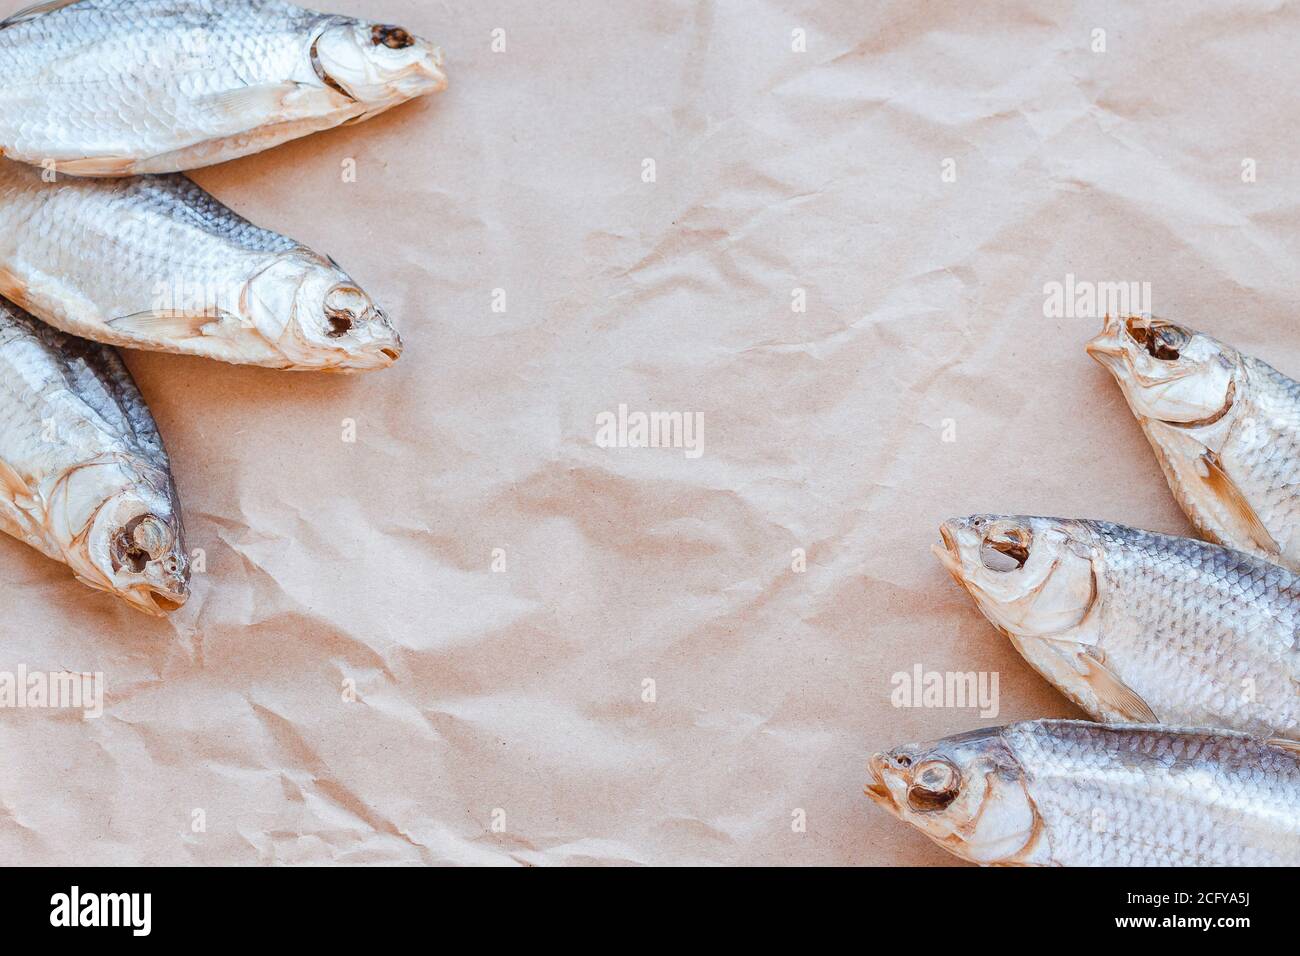 StockFish] Dried Fish WordPress Theme & Template